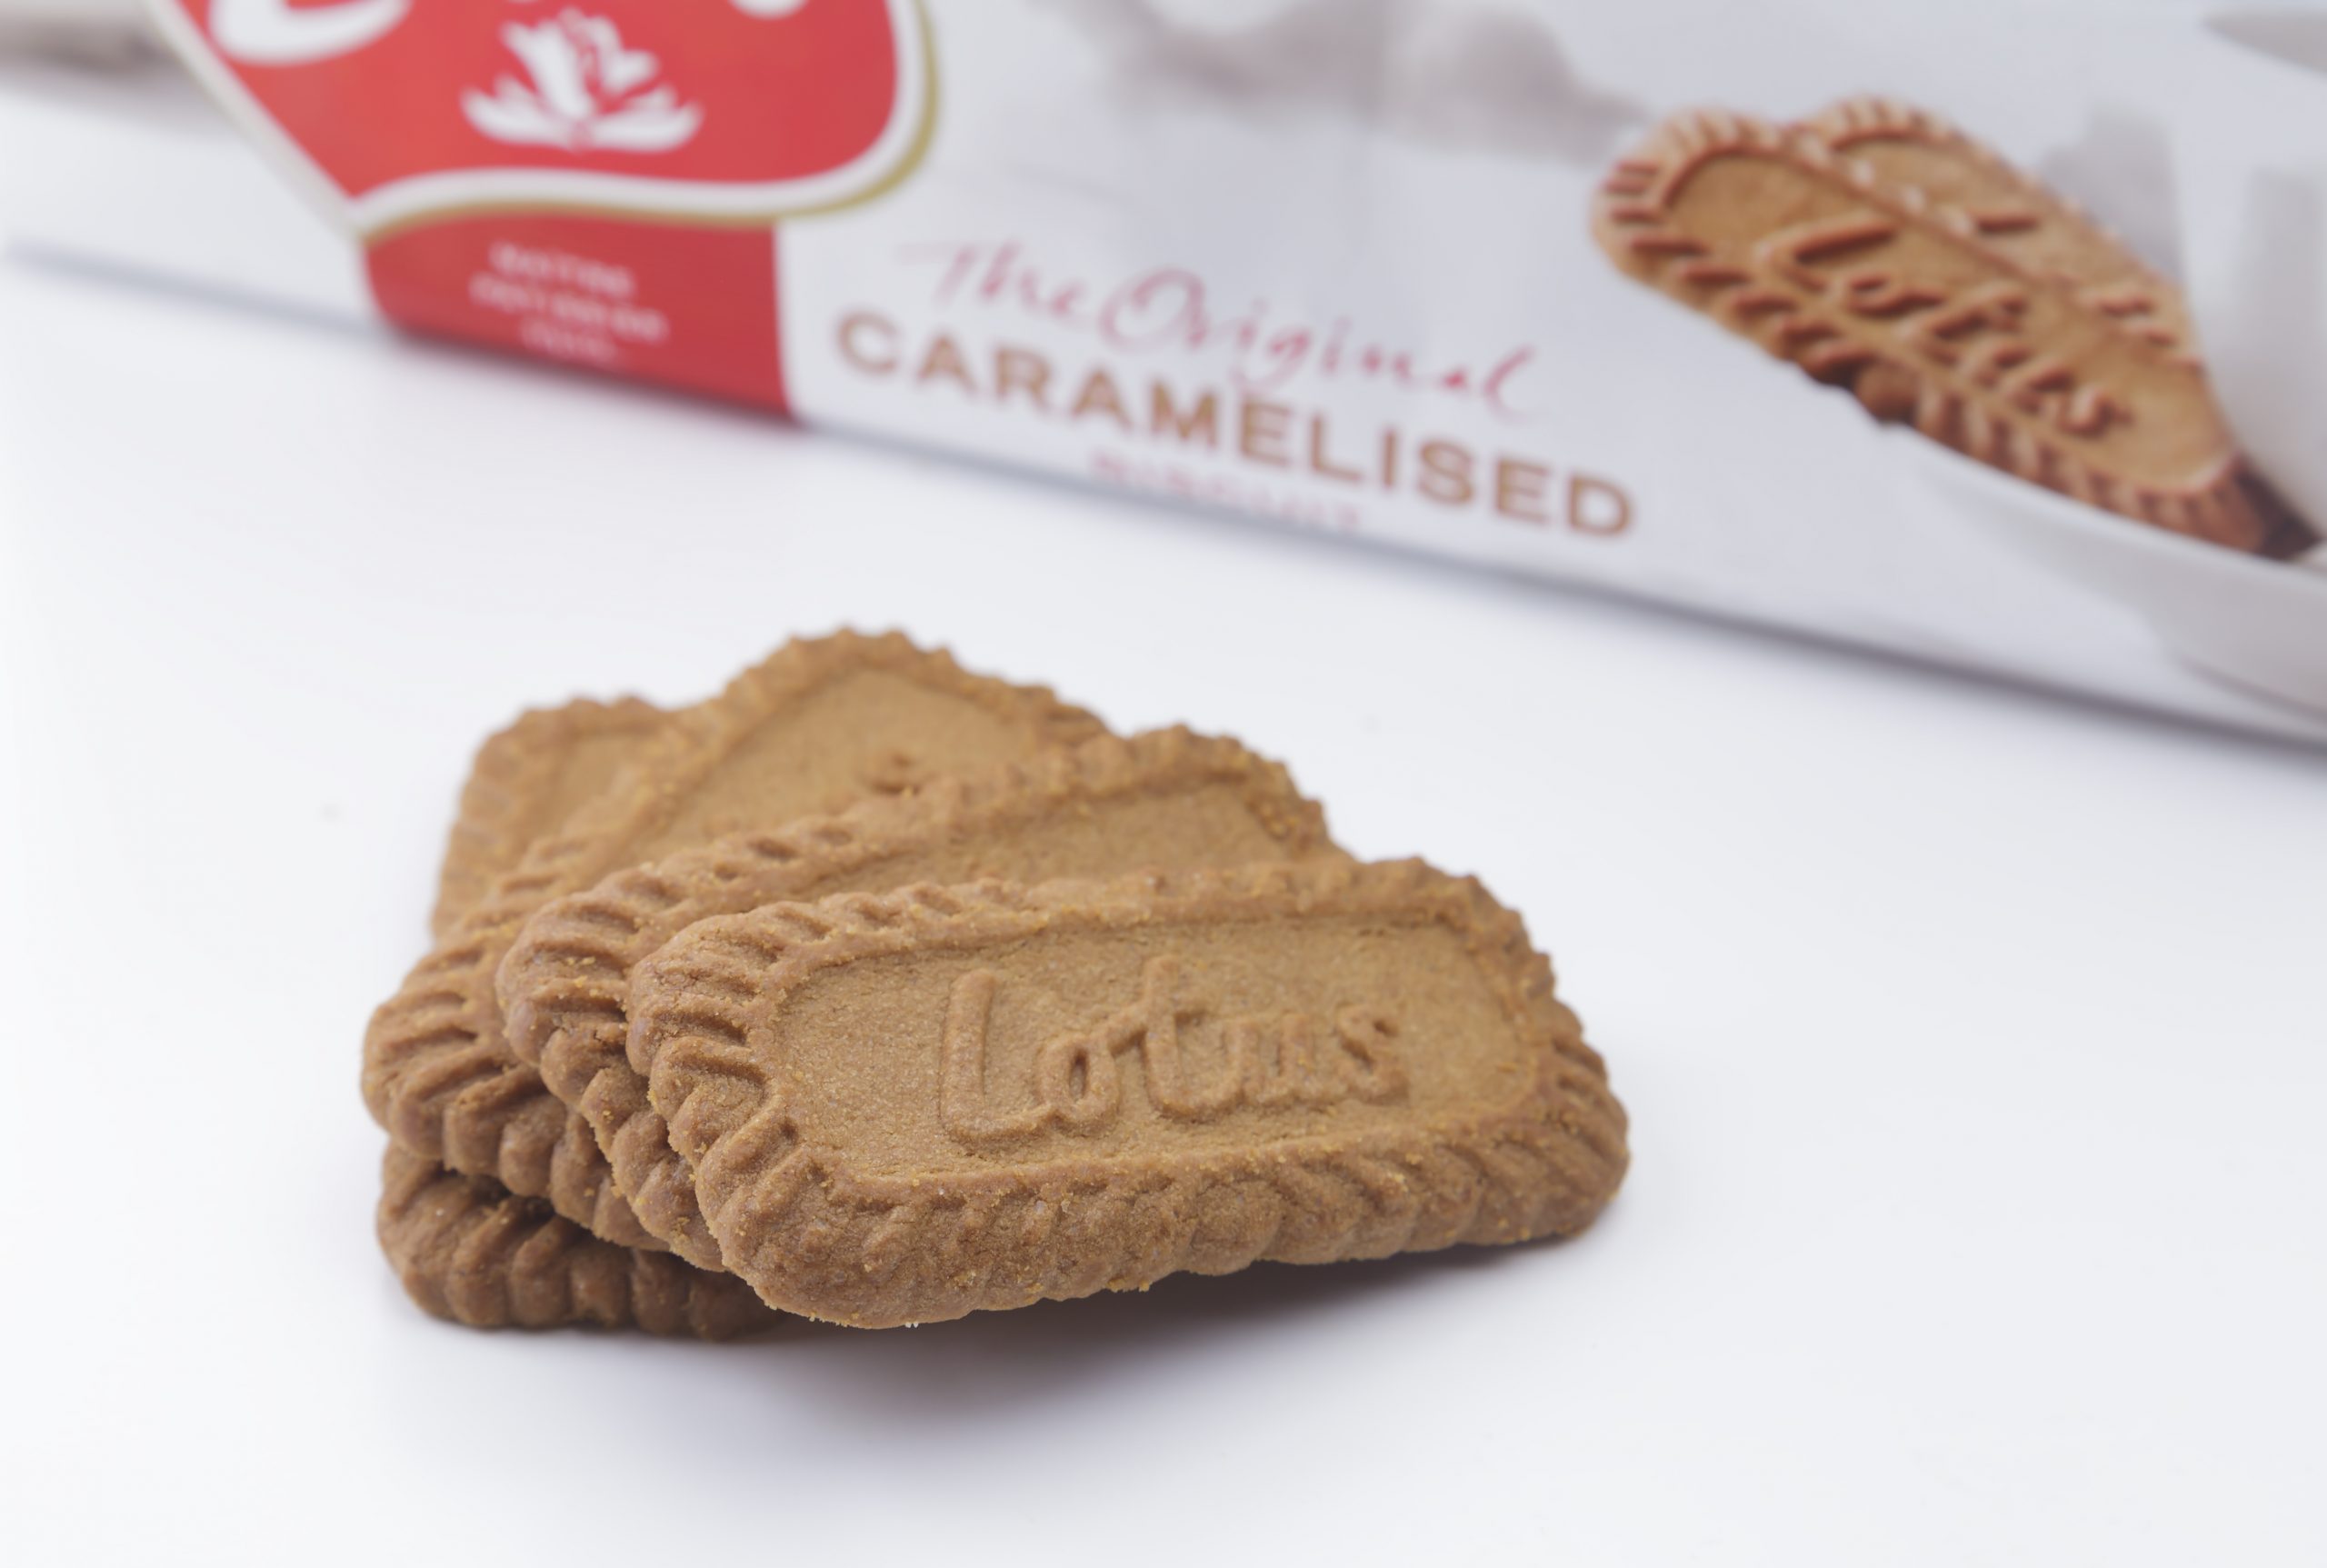 Lotus Biscoff biscuits: UK microbreweries launch beer made from Biscoff biscuits